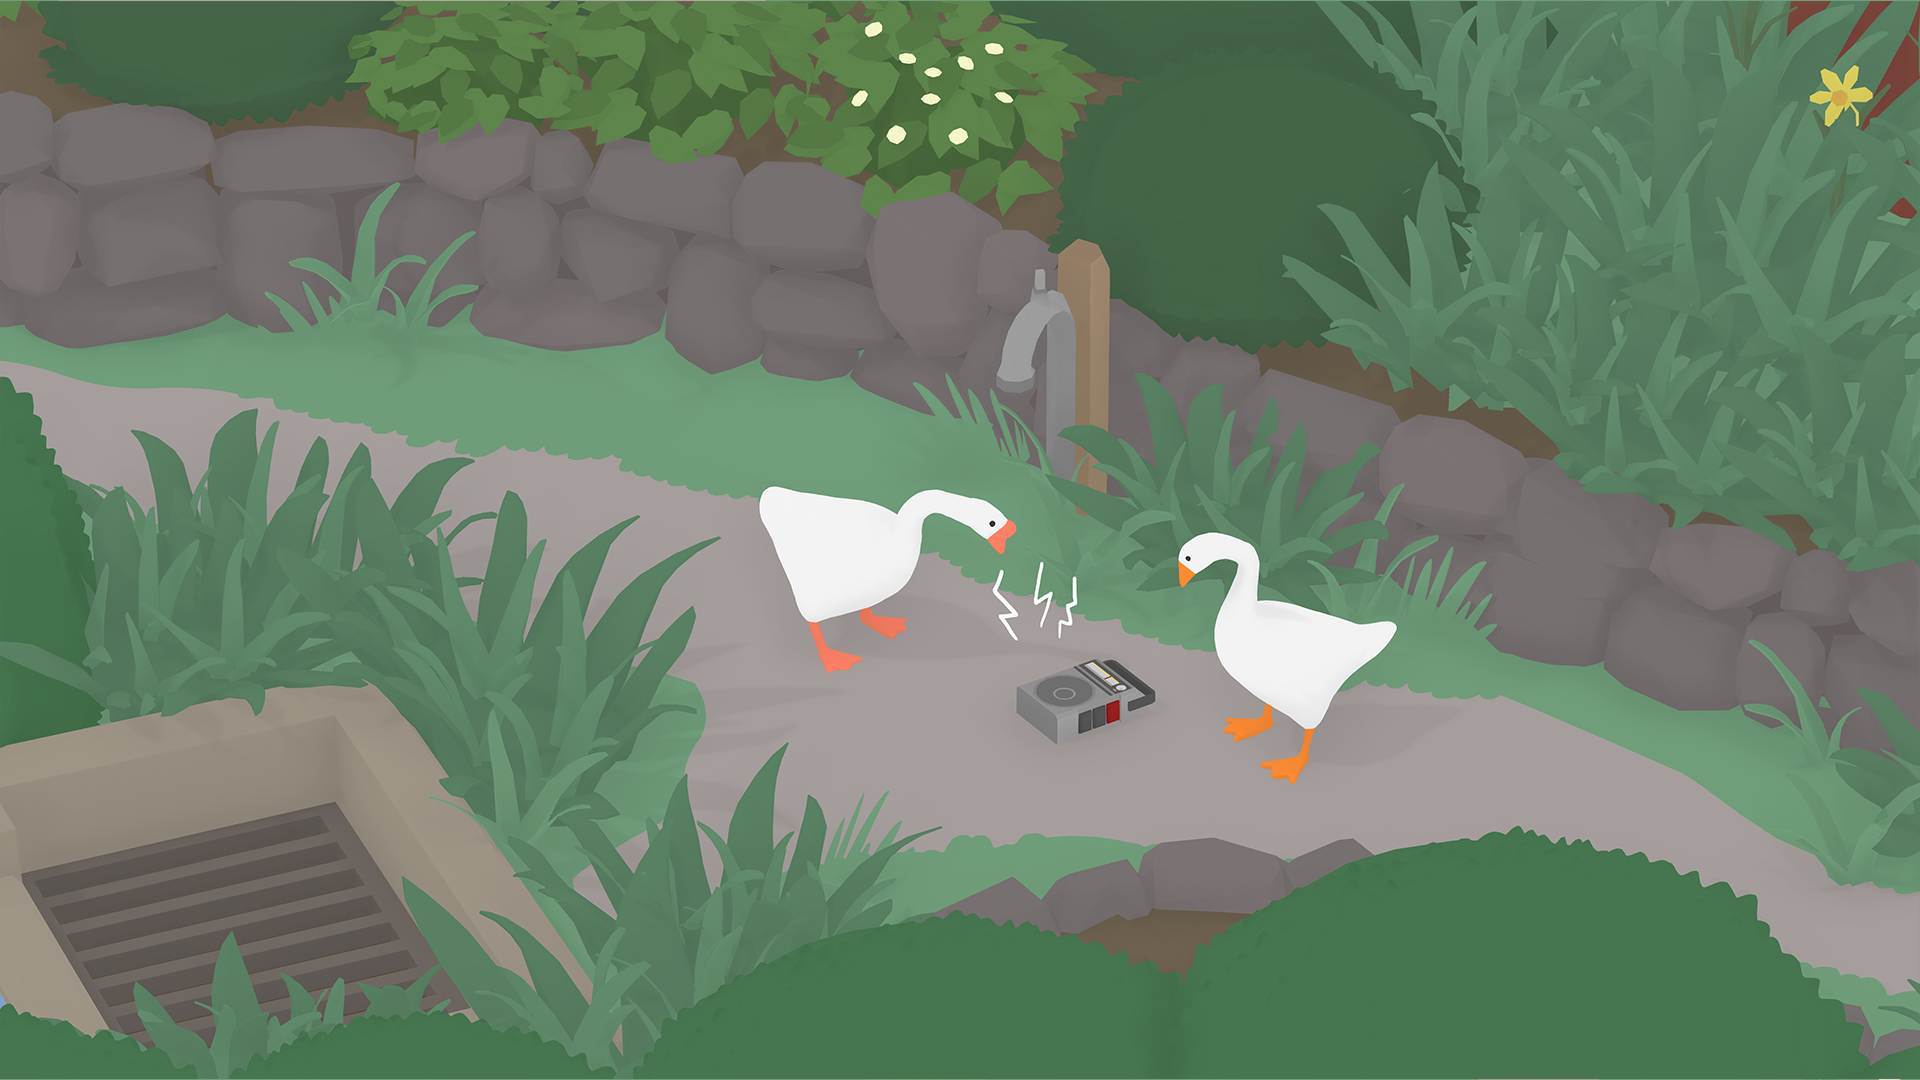 untitled goose game goose download